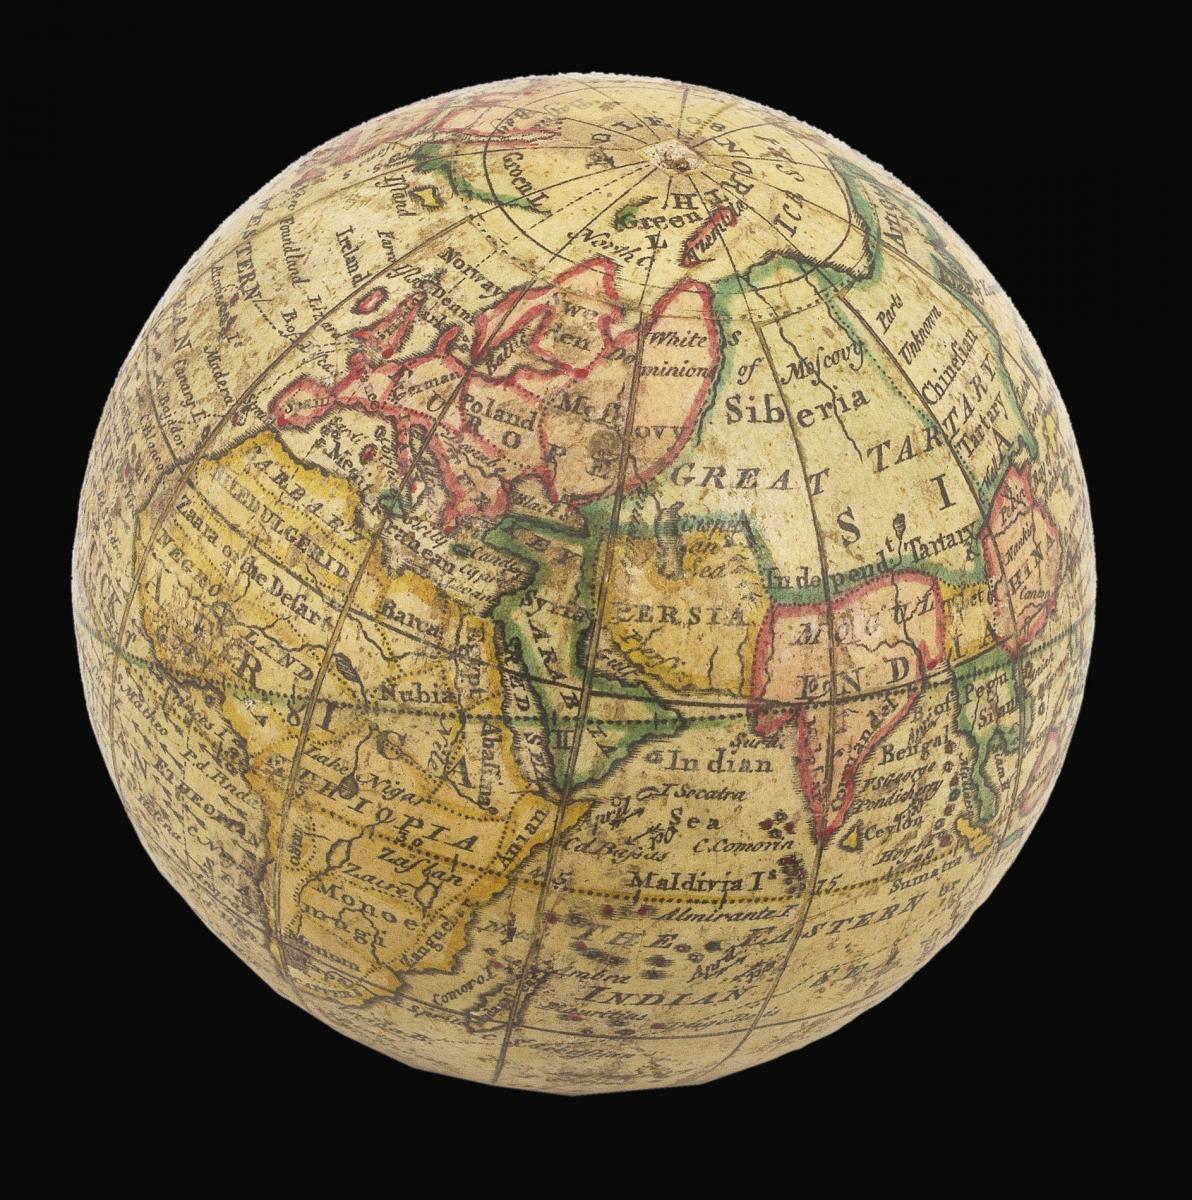 Newton's first pocket globe